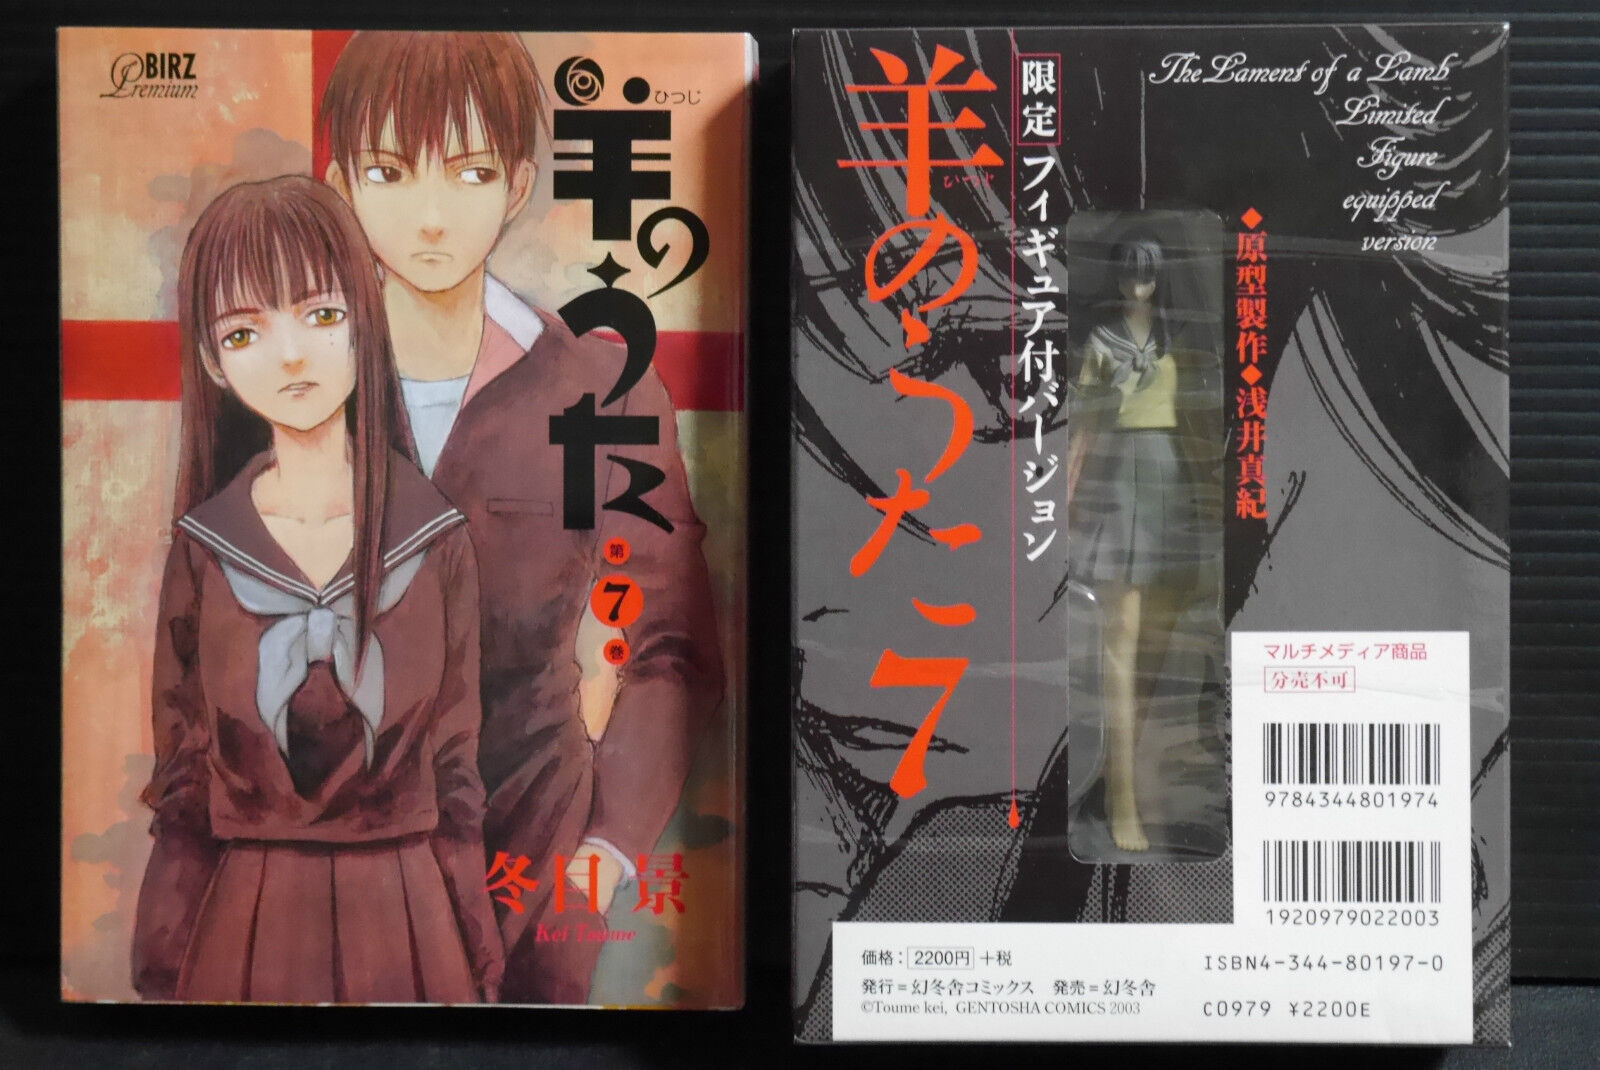 Lament of the Lamb / Hitsuji no Uta Manga 7 Limited Edition by Kei Toume - JAPAN